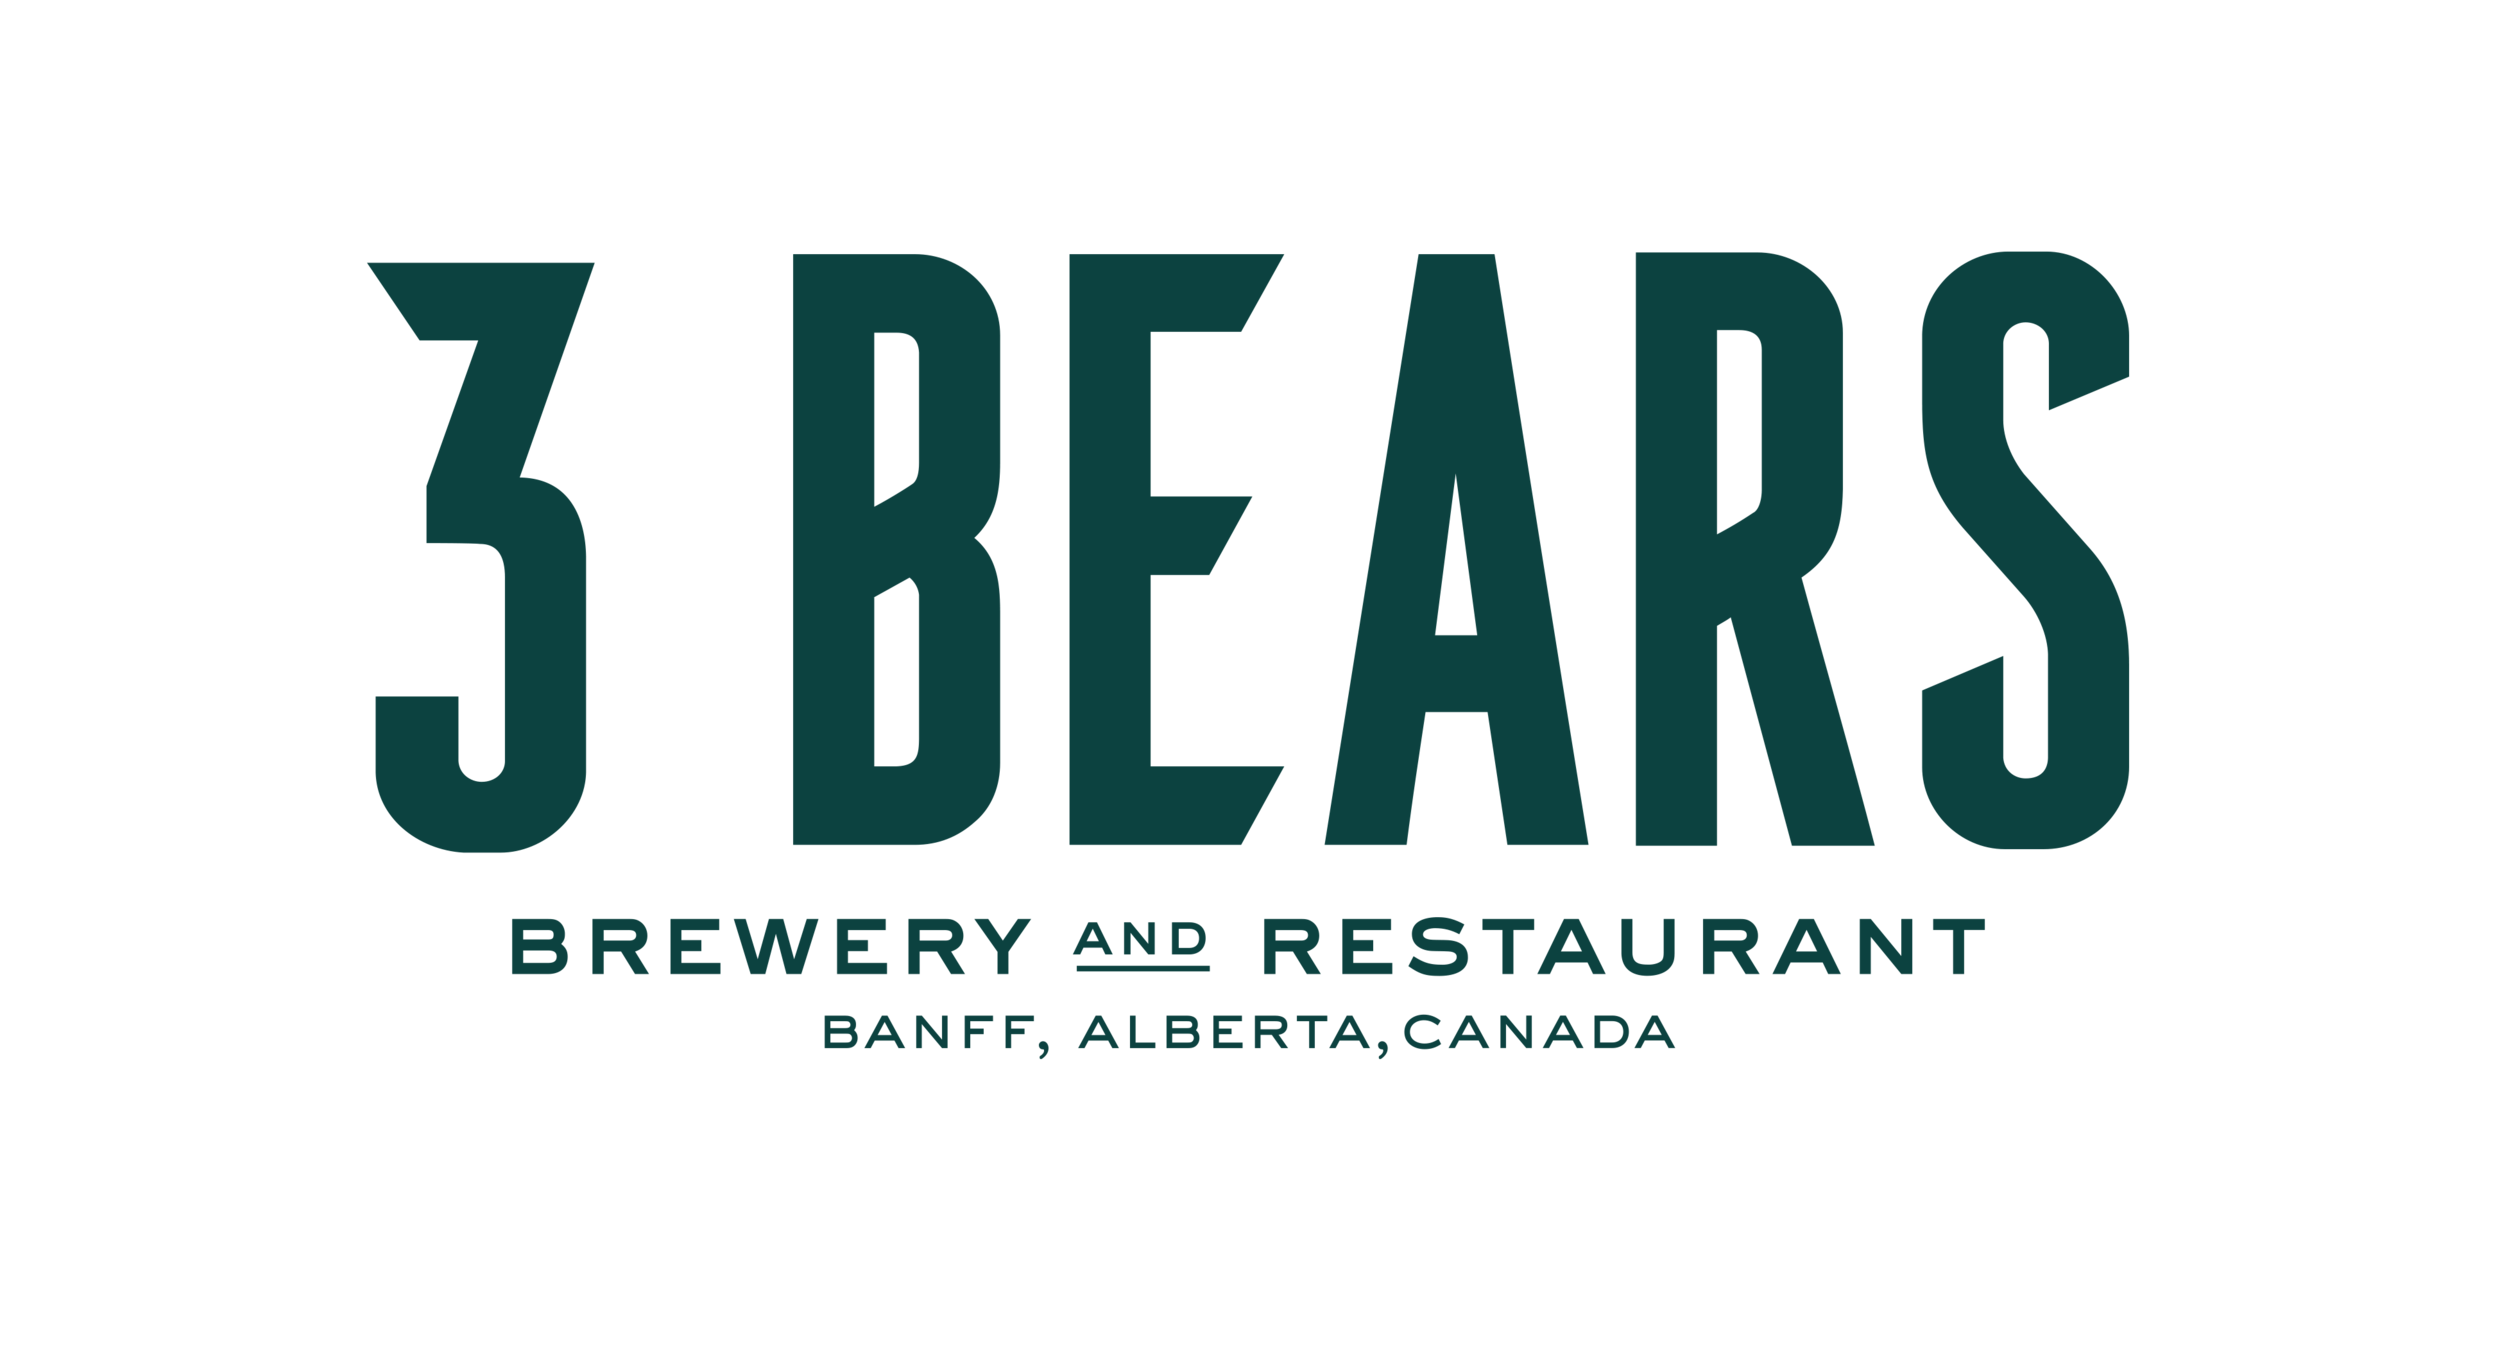 Three Bears Brewery & Restaurant